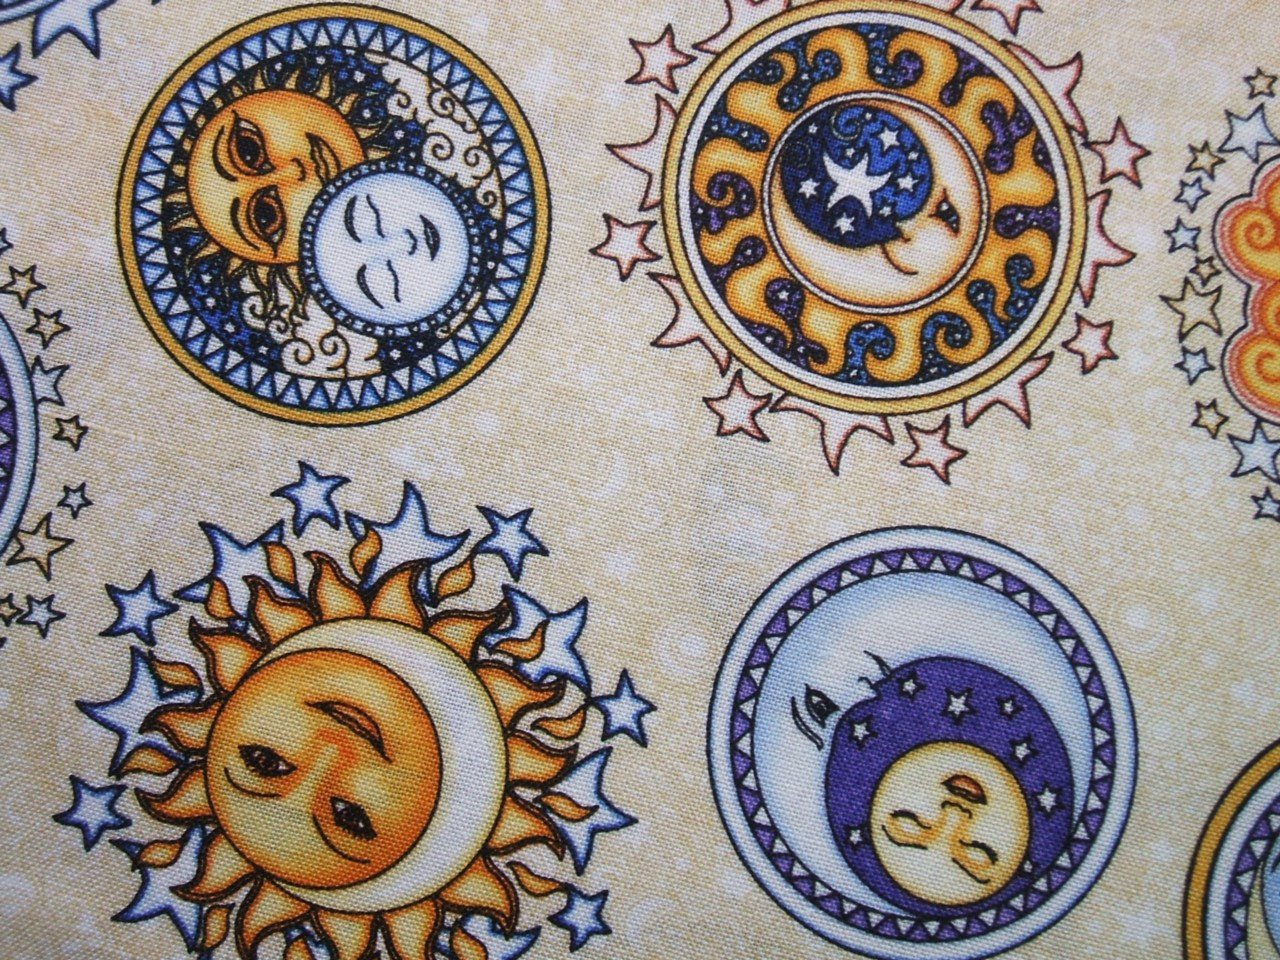 sun and moon art tumblr